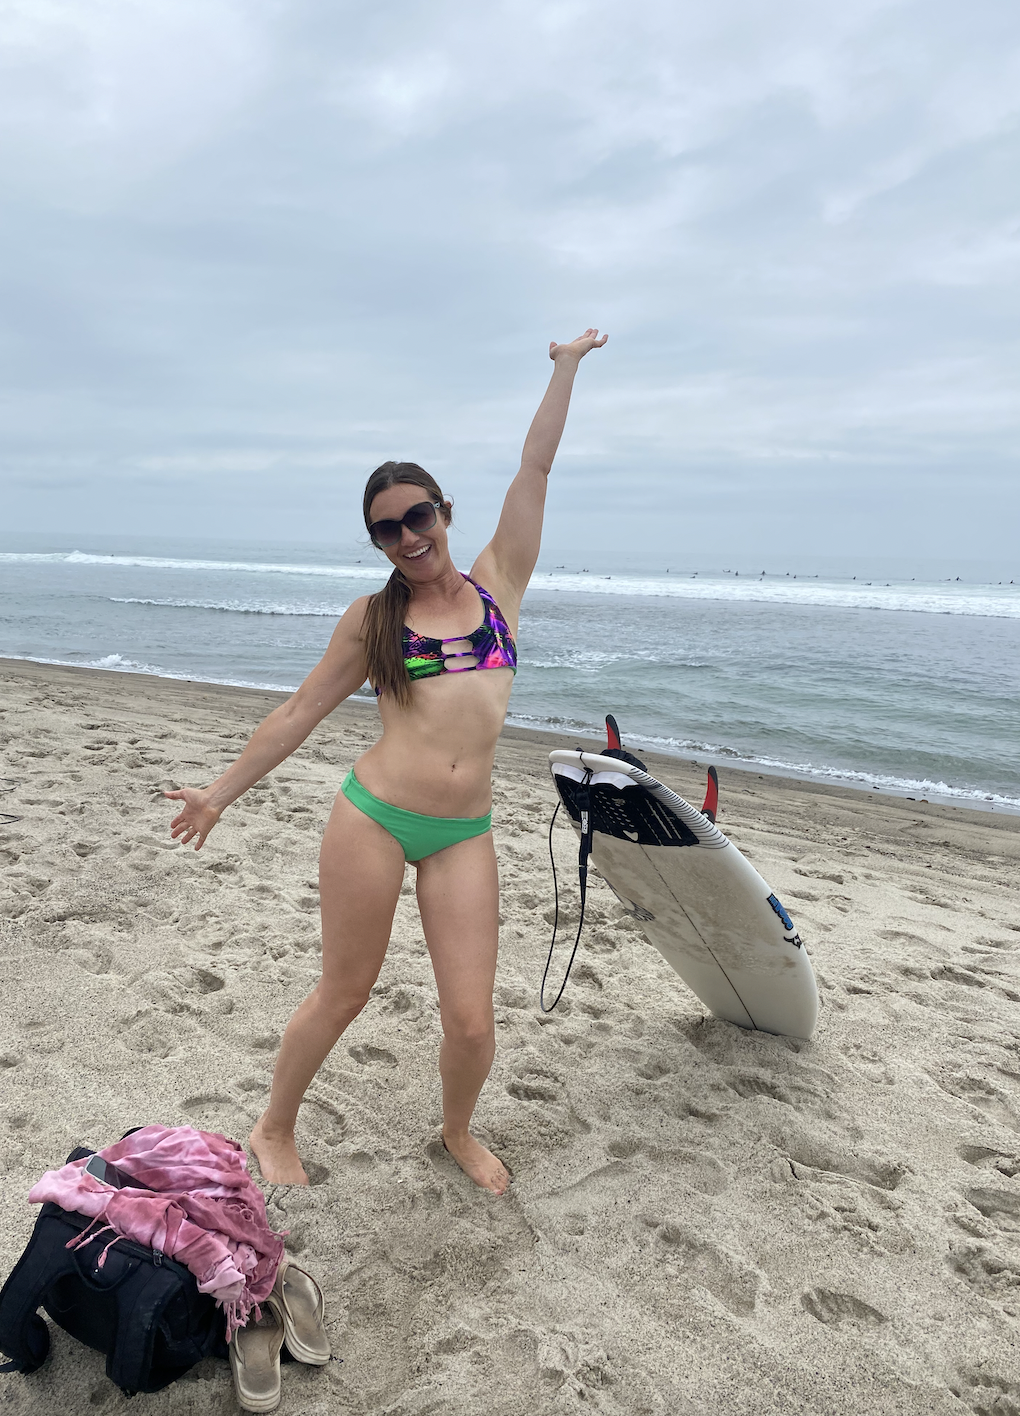 Chargers San Diego Women's Bikini Beach Swimsuit Underwear Panty Set